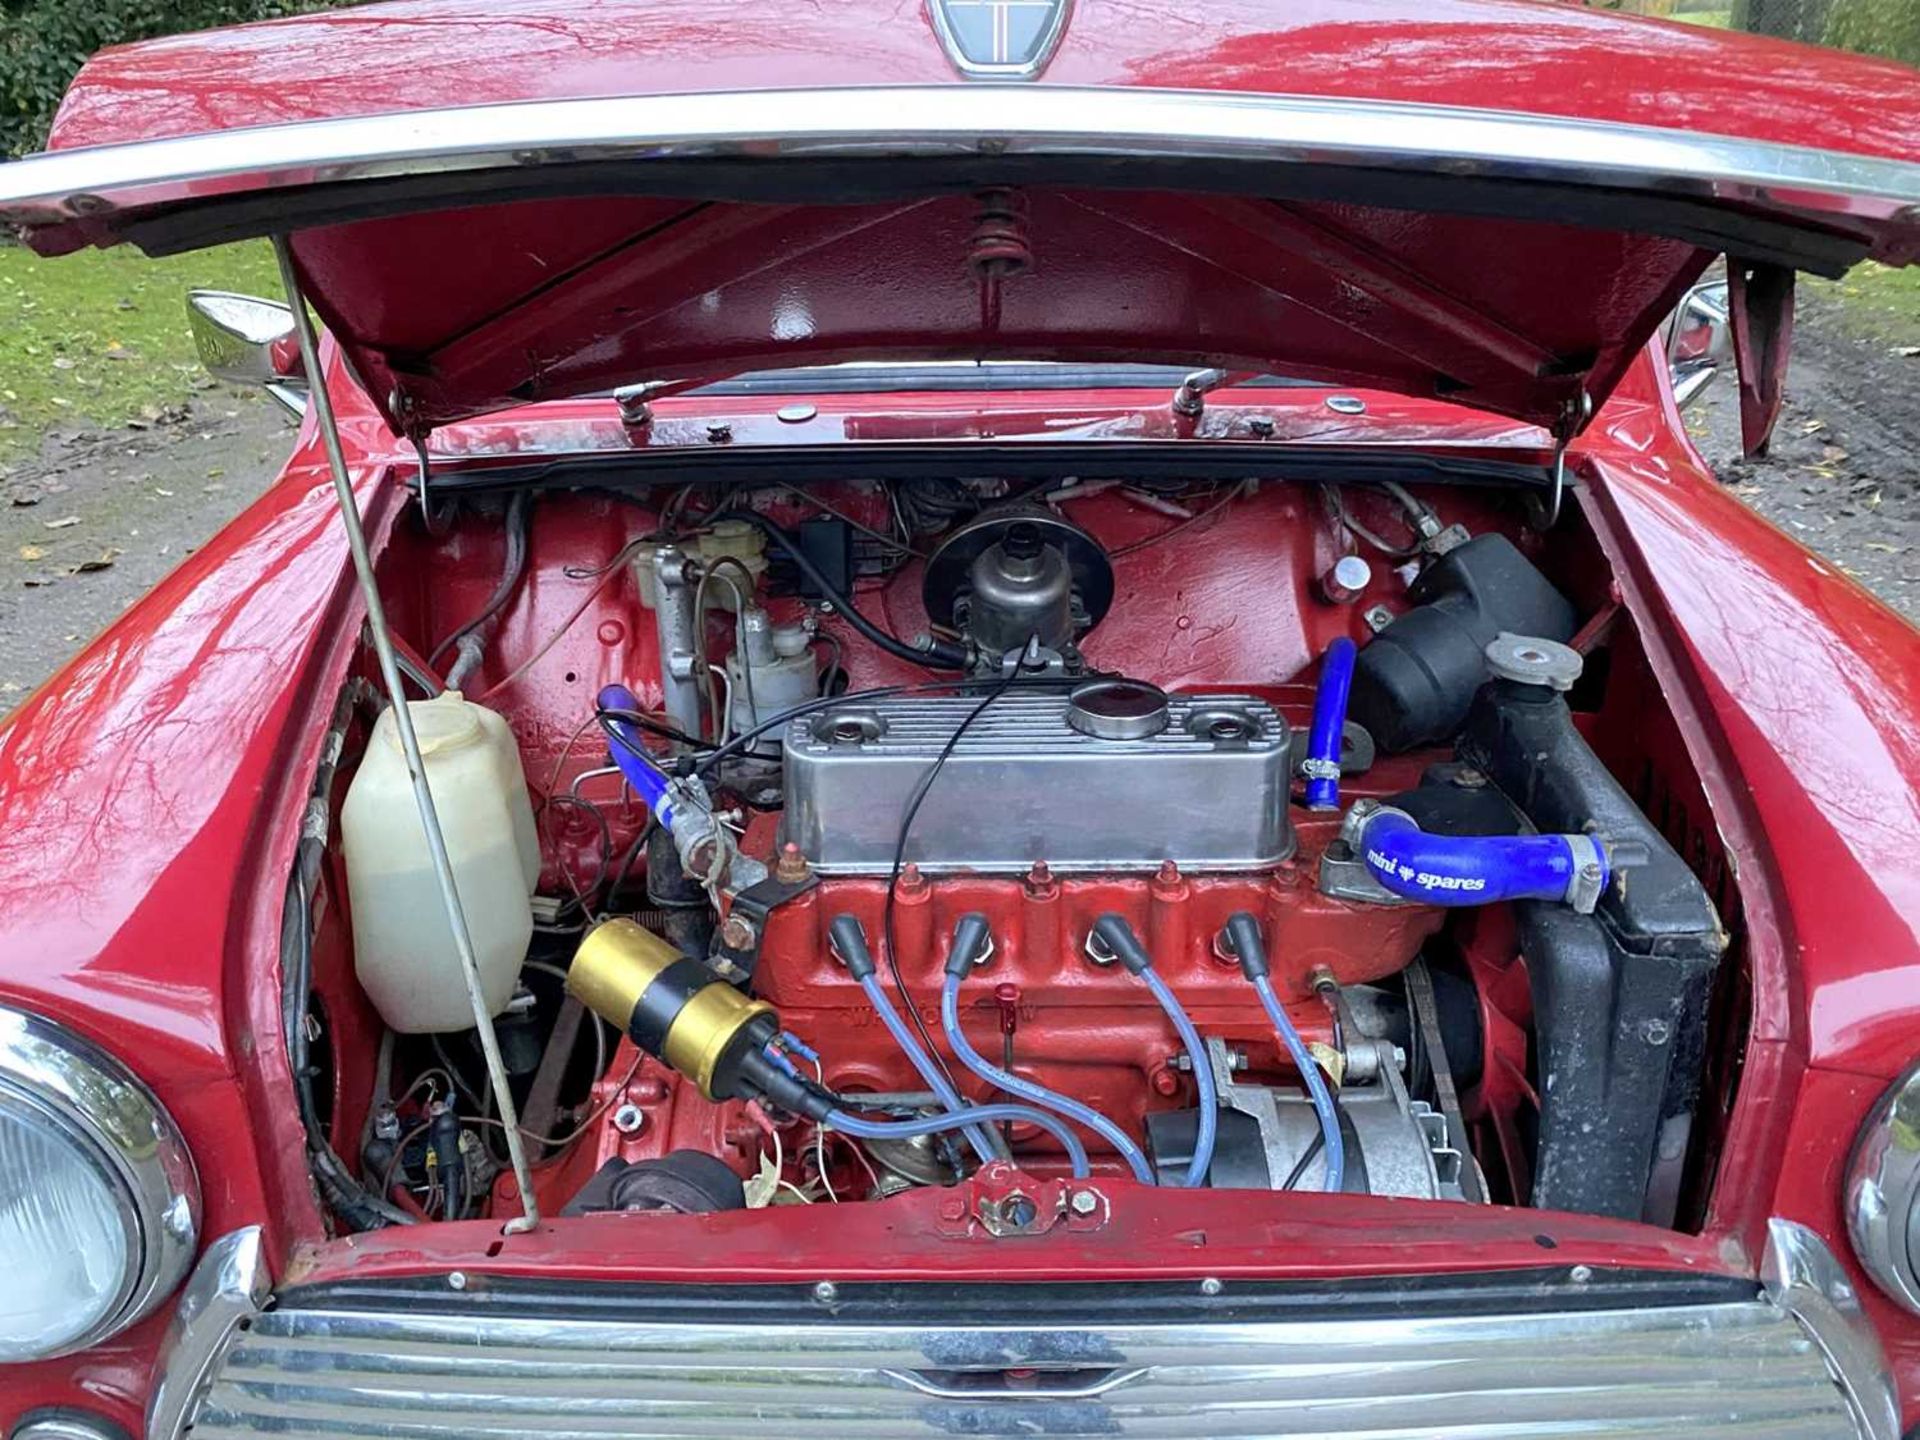 1984 Austin Mini 1330cc engine - Image 44 of 82